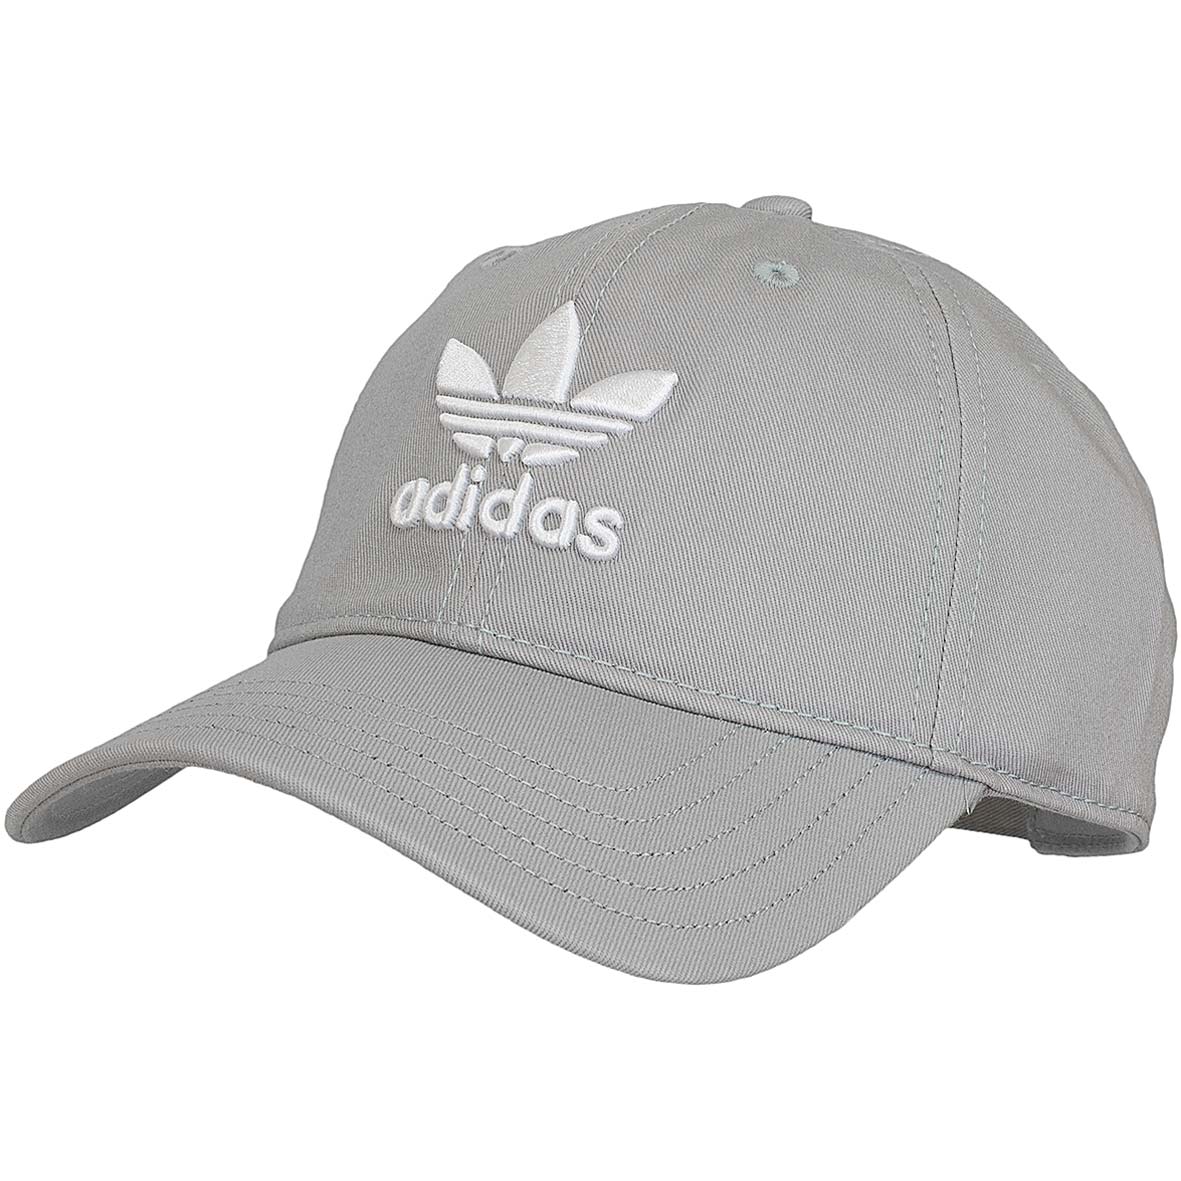 ☆ Adidas Originals Snapback Cap Trefoil grau - hier bestellen!